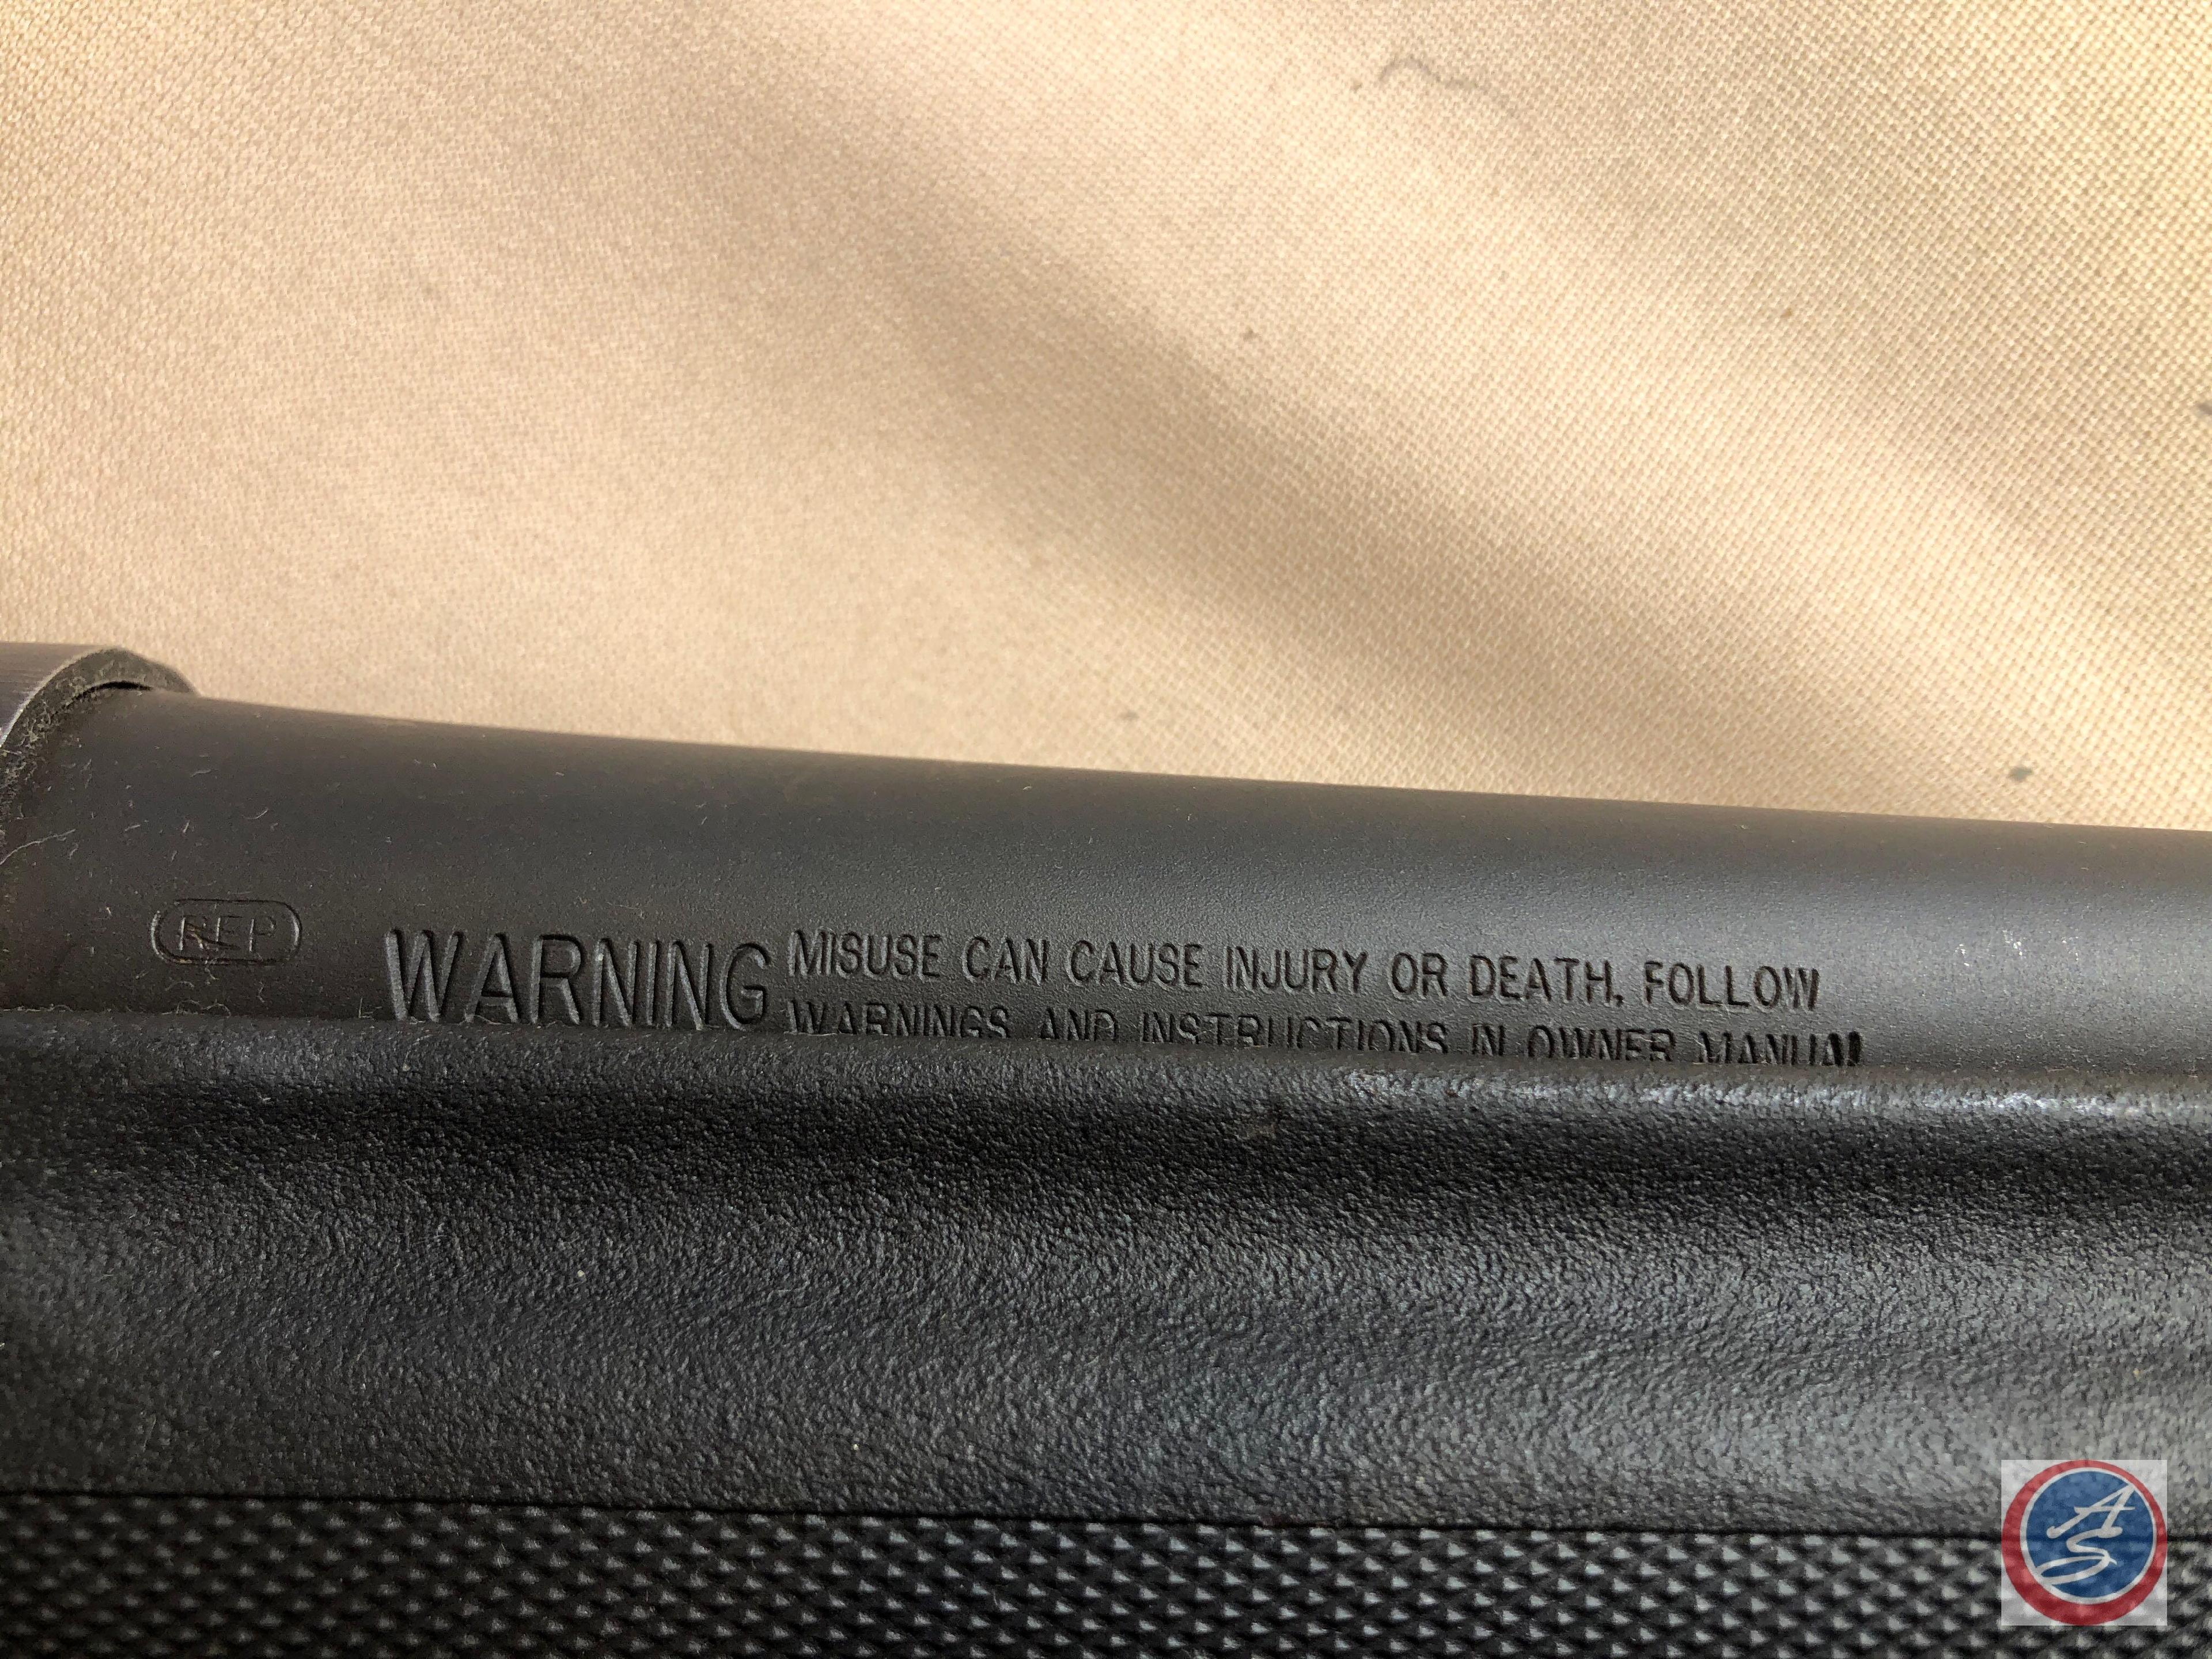 Manufacturer: Remington 870 CaliberGauge: 12ga. Model: 1871 FirearmType: shotgun SerialNumber: